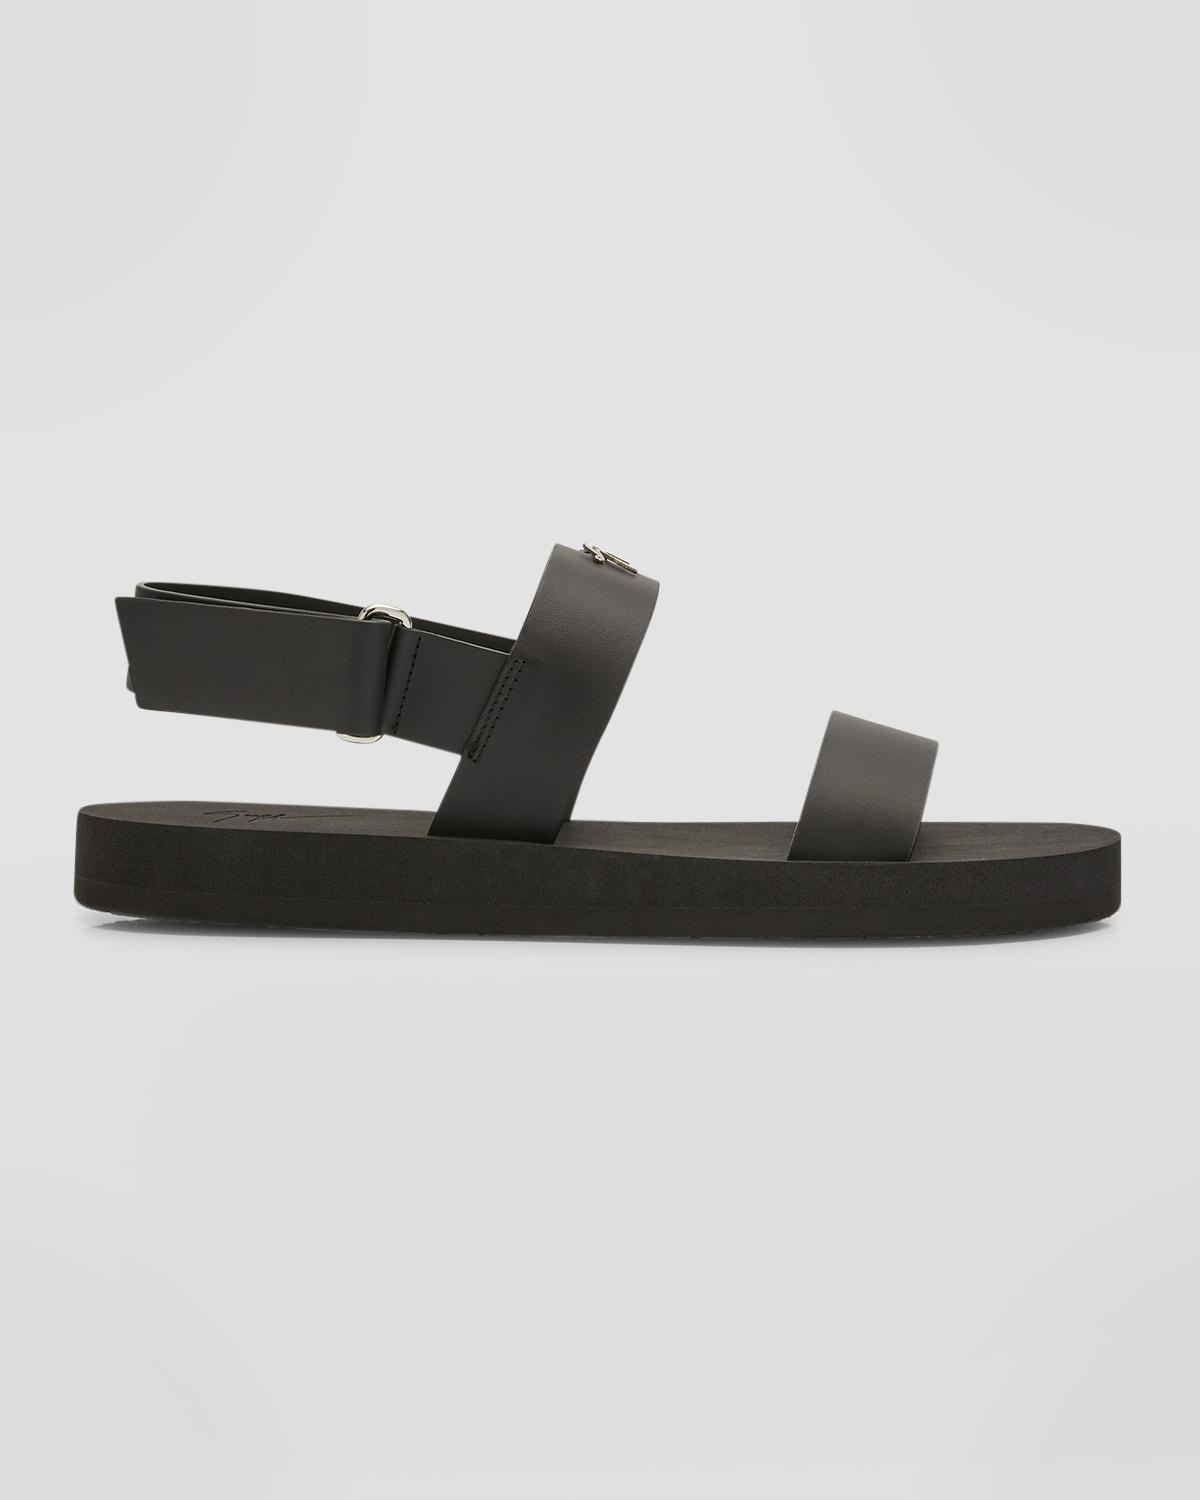 Giuseppe Zanotti Men's GZ Saiph Leather Sandals - Size: 40 EU (7D US) - CIOCCO Product Image